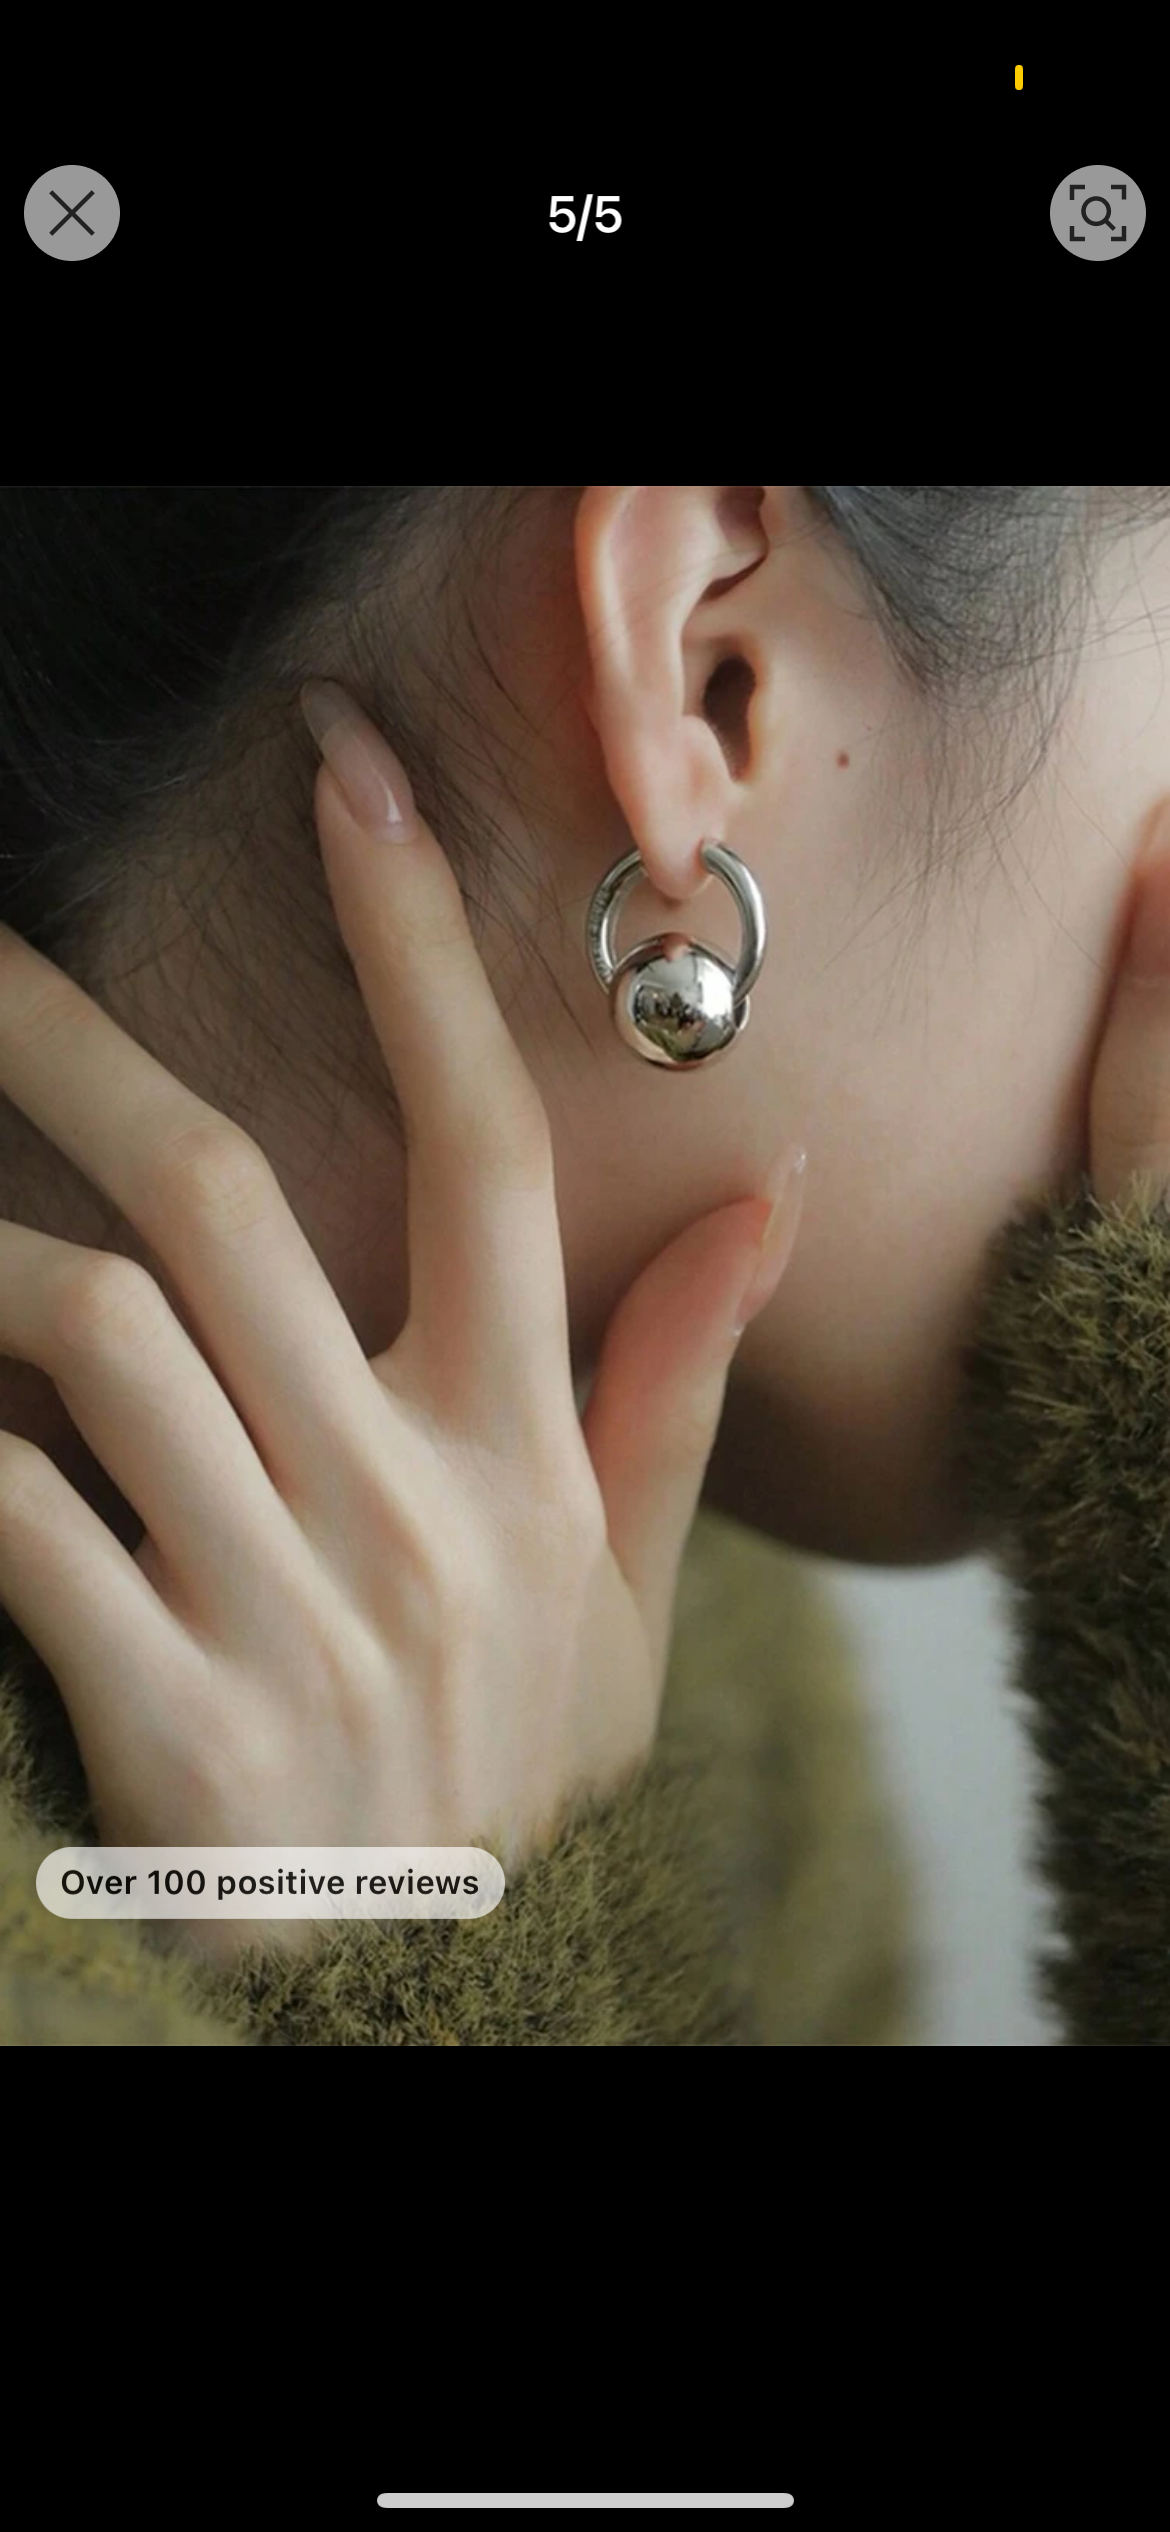 The Orion earrings